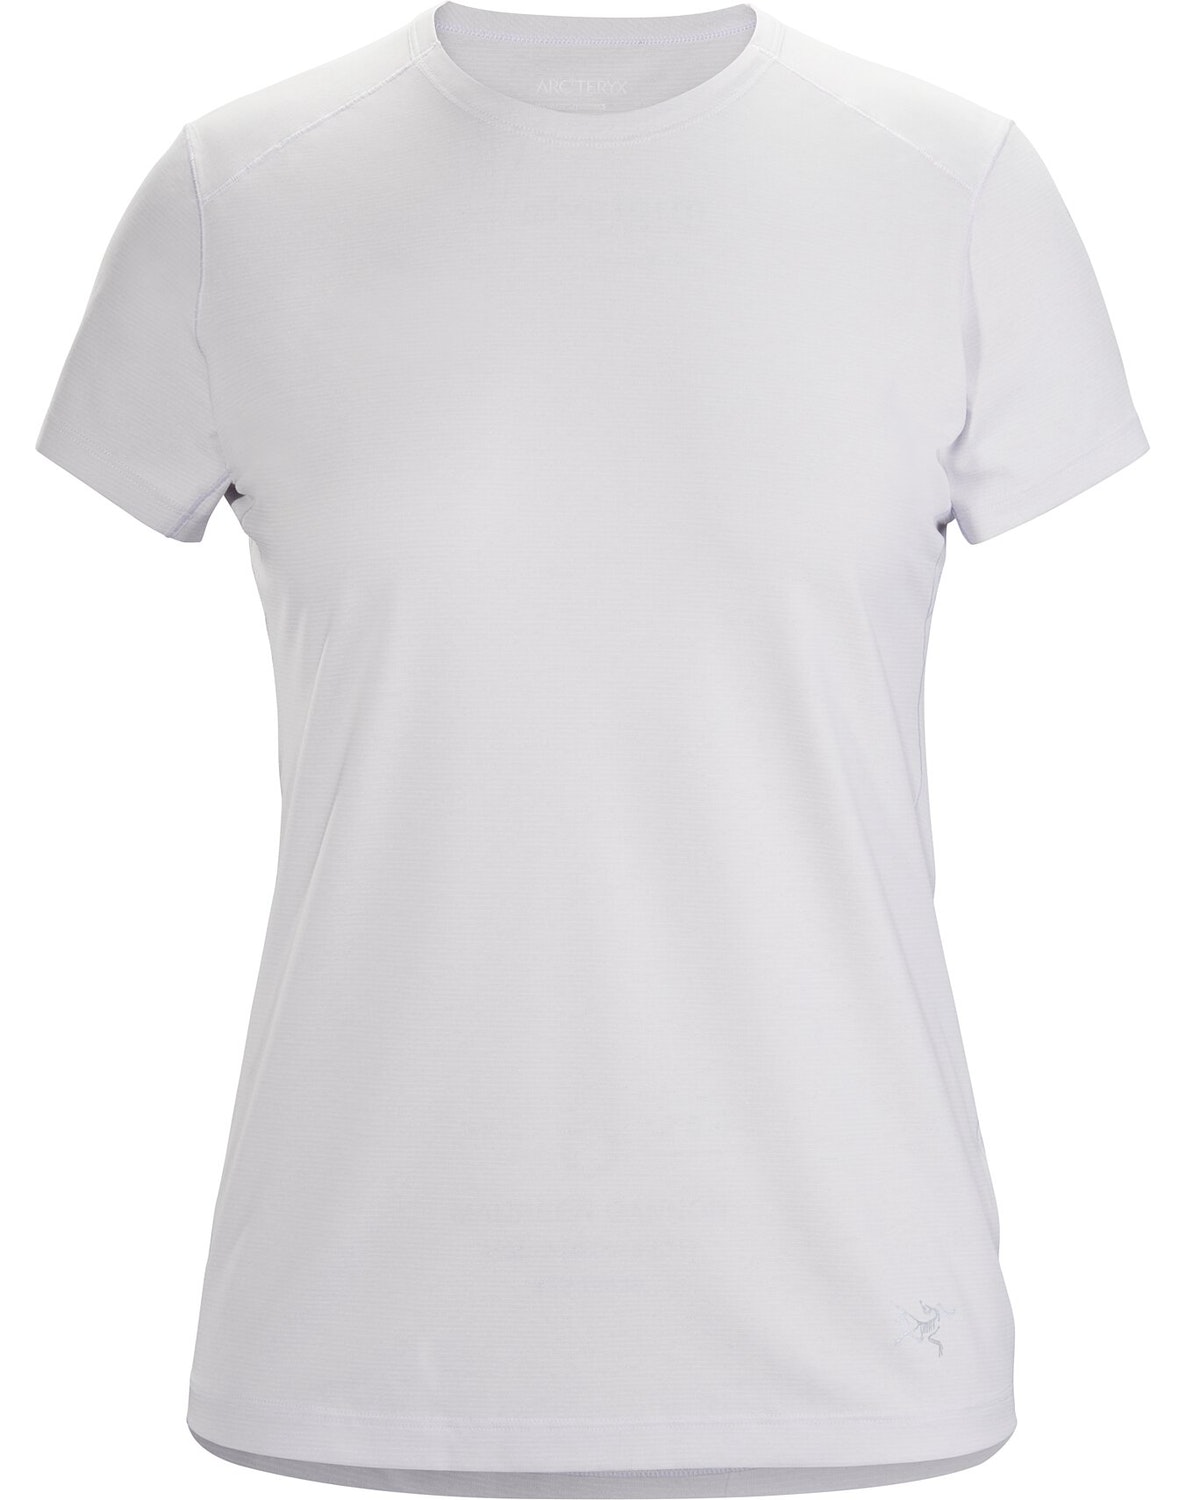 T-shirt Arc'teryx Quadra Crew Neck Donna Grigie - IT-1359731